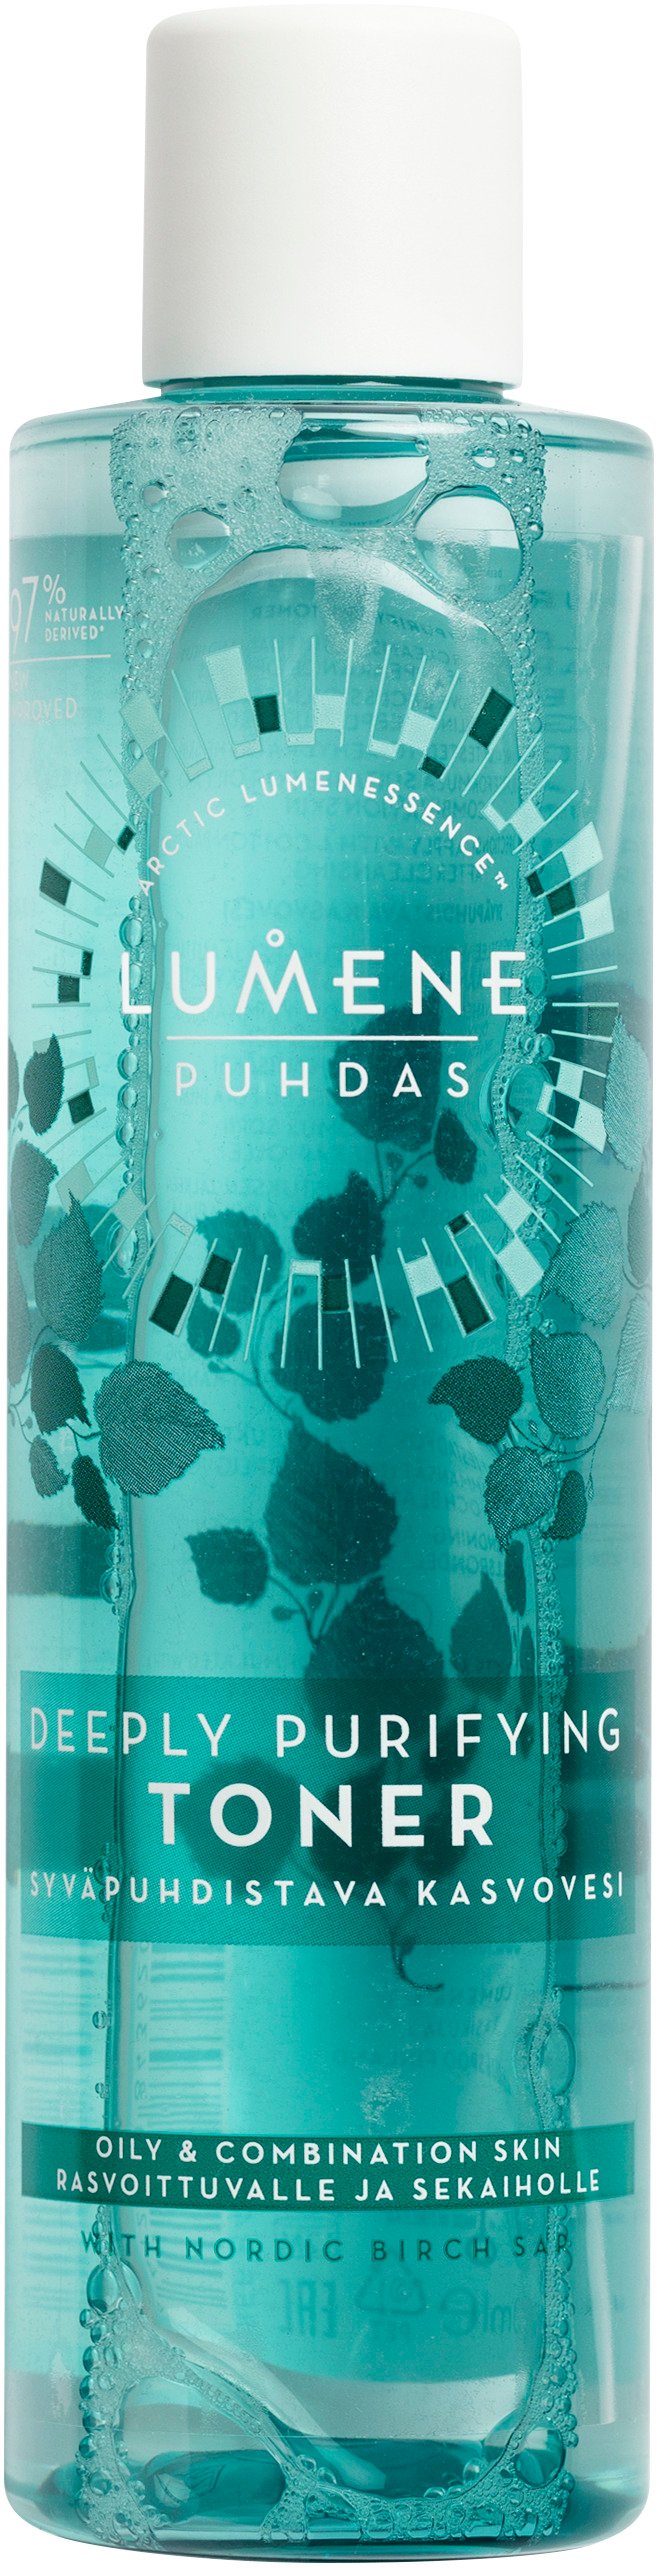 Lumene PUHDAS Deeply Purifying Toner 200 ml